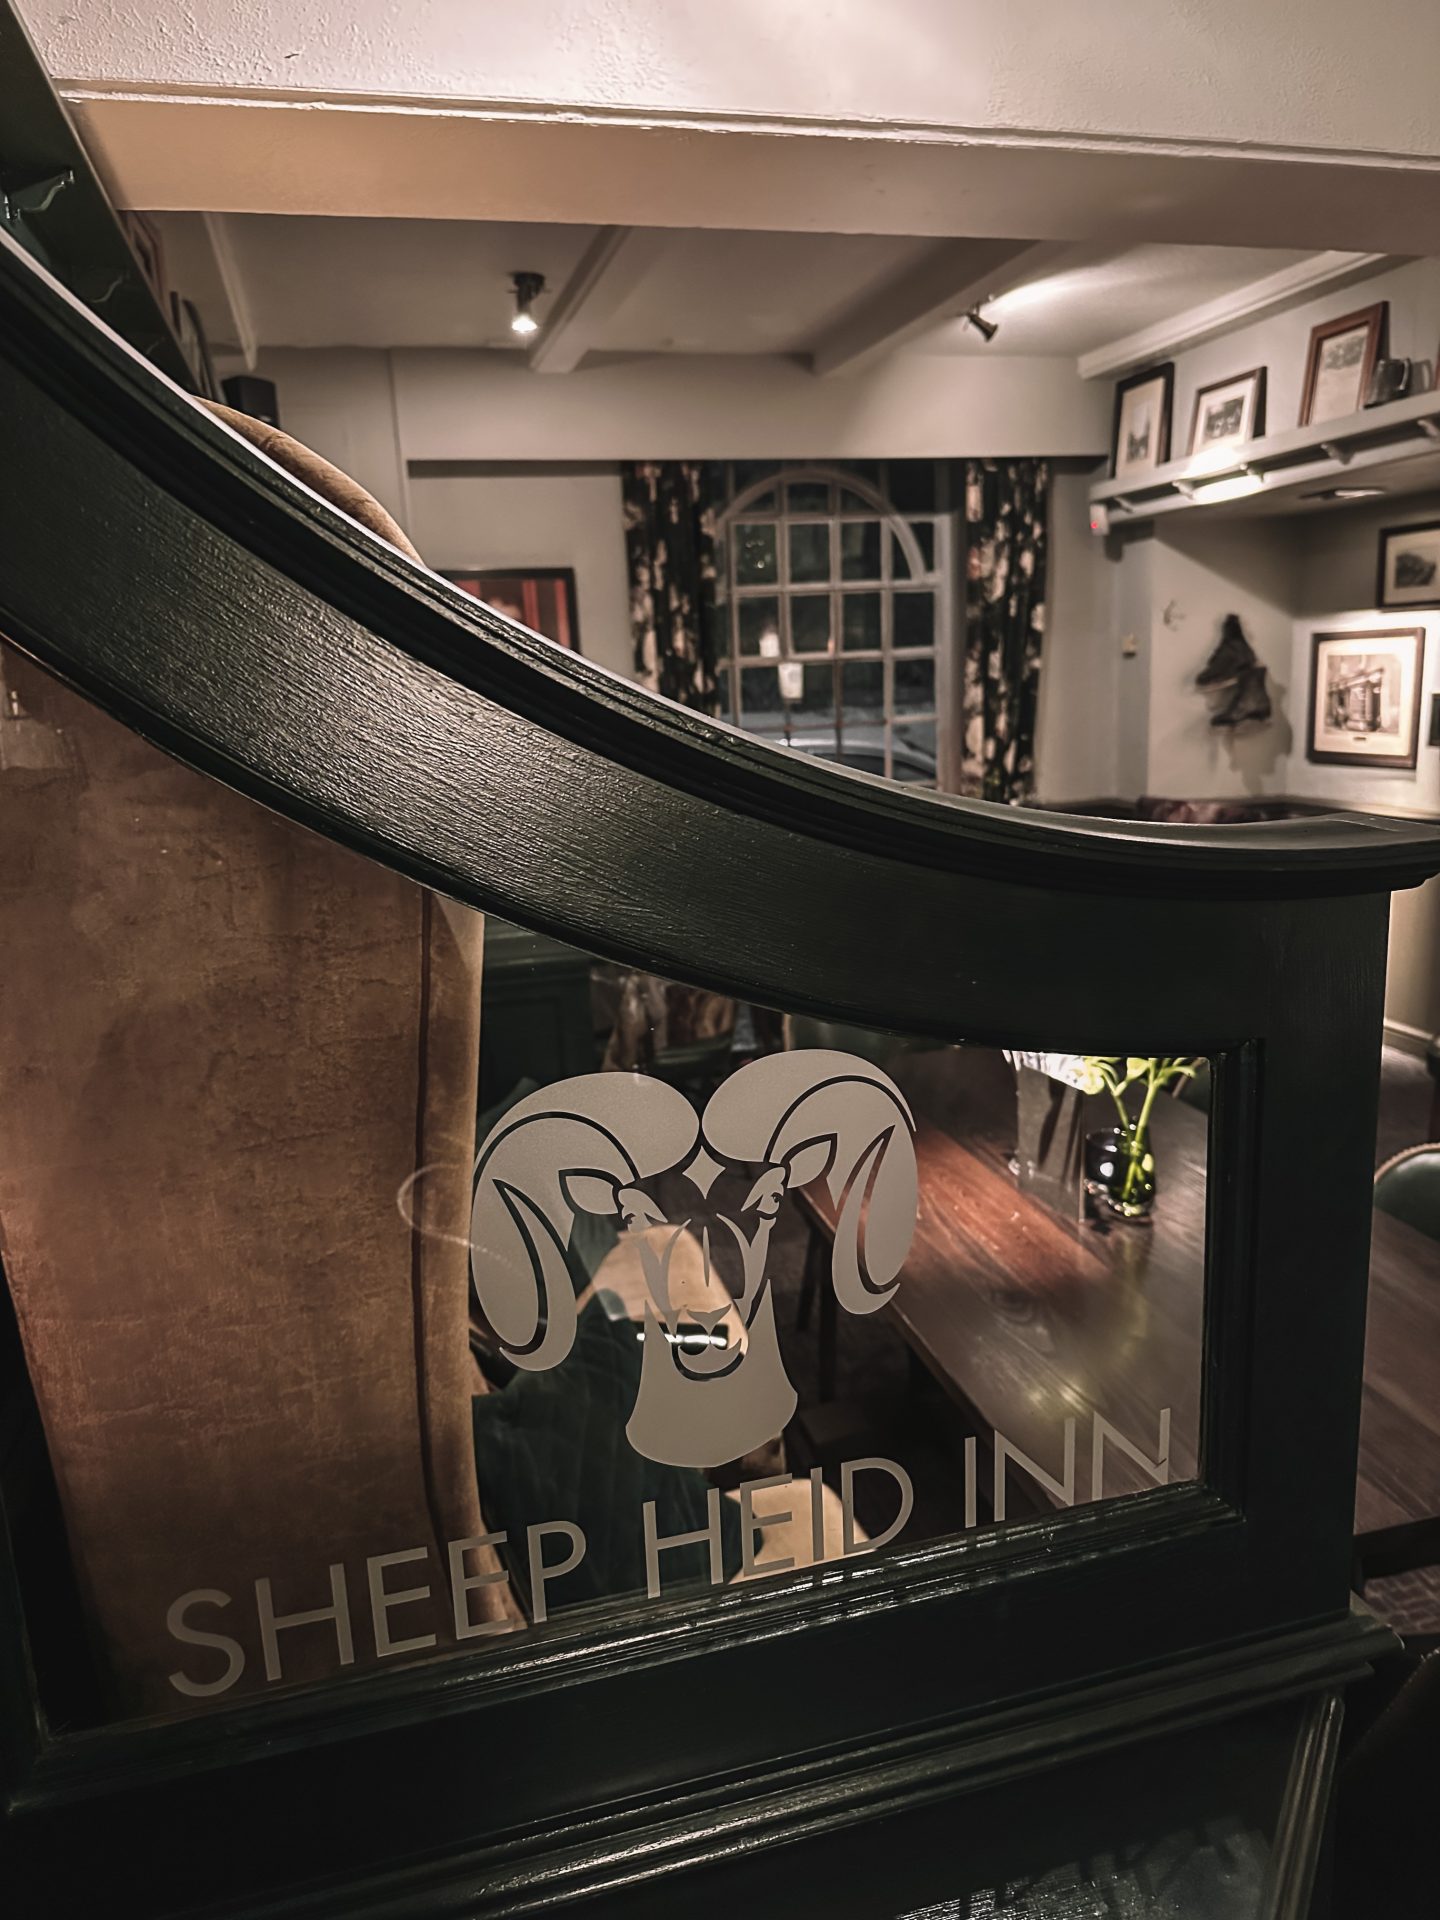 The Sheep Heid Inn, Edinburgh, Scotland